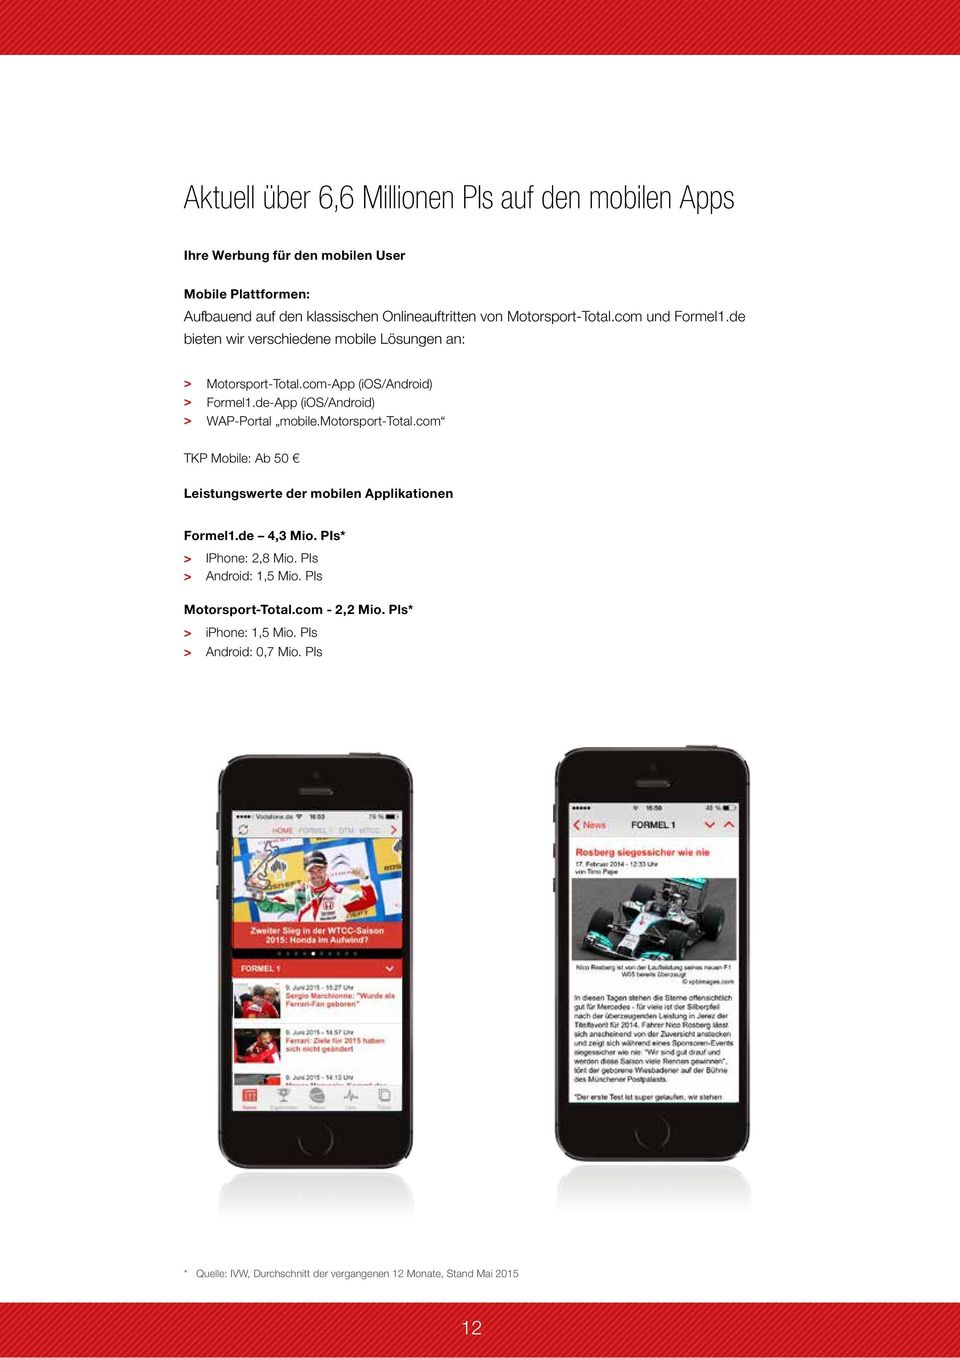 de-App (ios/android) > > WAP-Portal mobile.motorsport-total.com TKP Mobile: Ab 50 Leistungswerte der mobilen Applikationen Formel1.de 4,3 Mio.